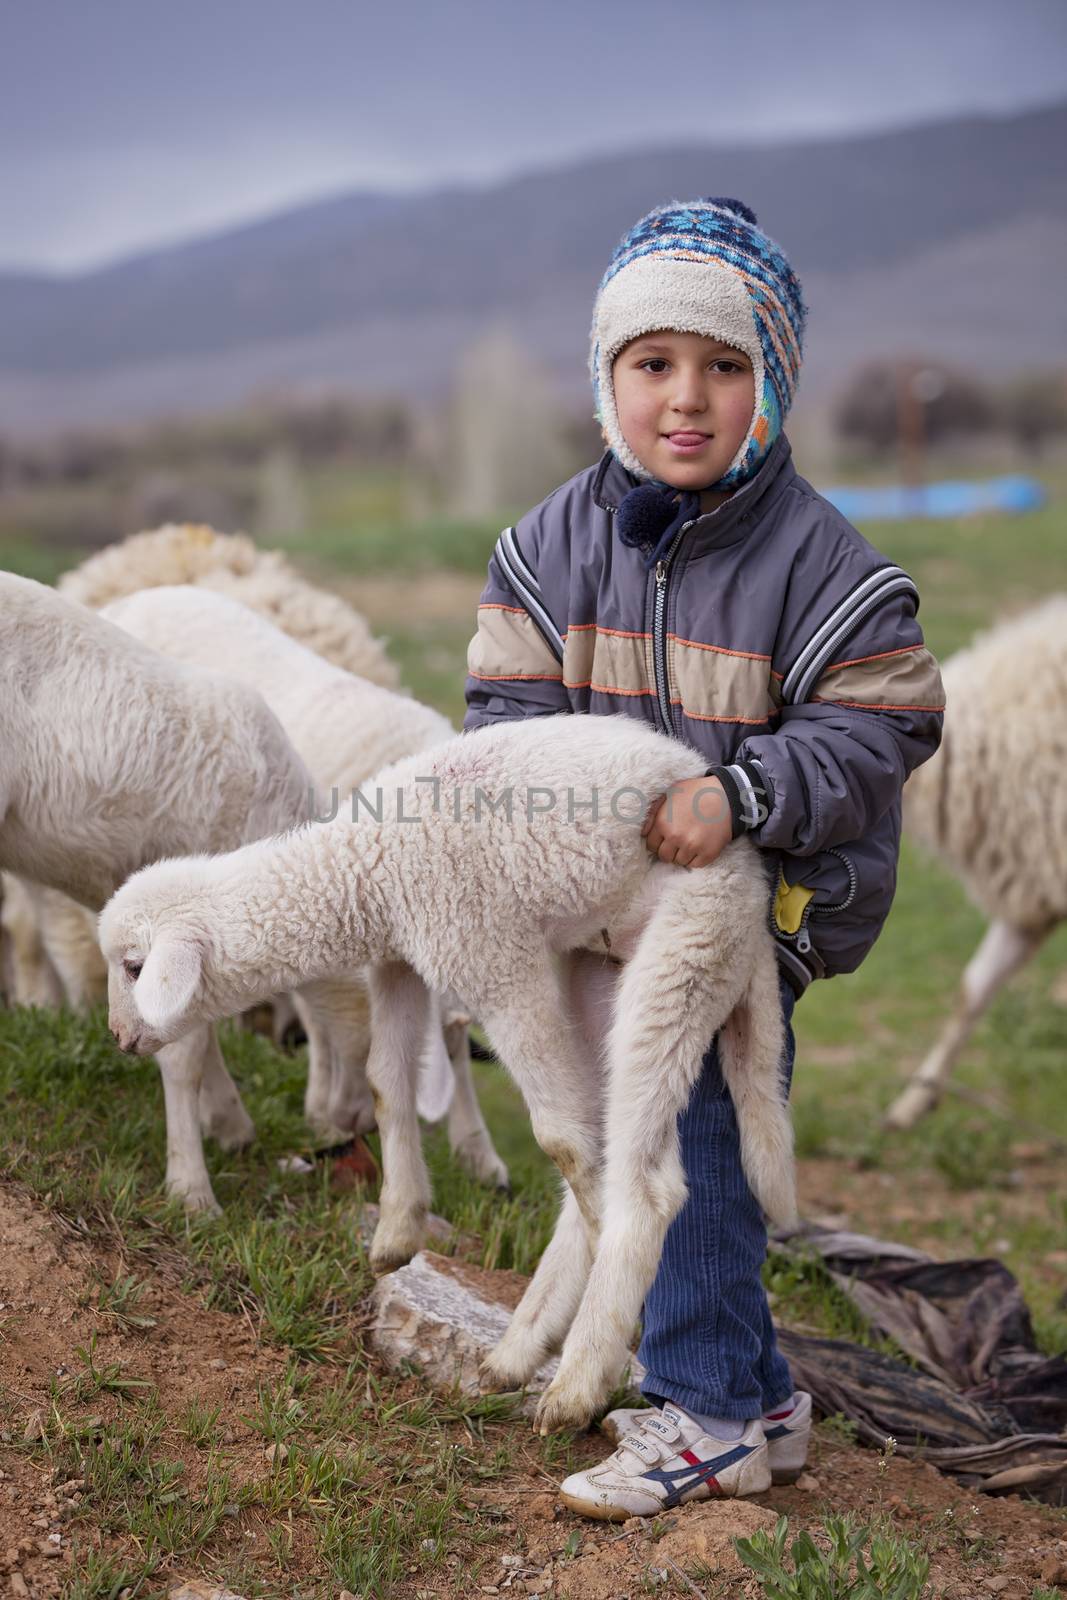 ANATOLIA, TURKEY APRIL 18: Unidentified young boy shepherd demonstrates his strength on April 18, 2012 in rural Anatolia, Turkey prior to Anzac Day.